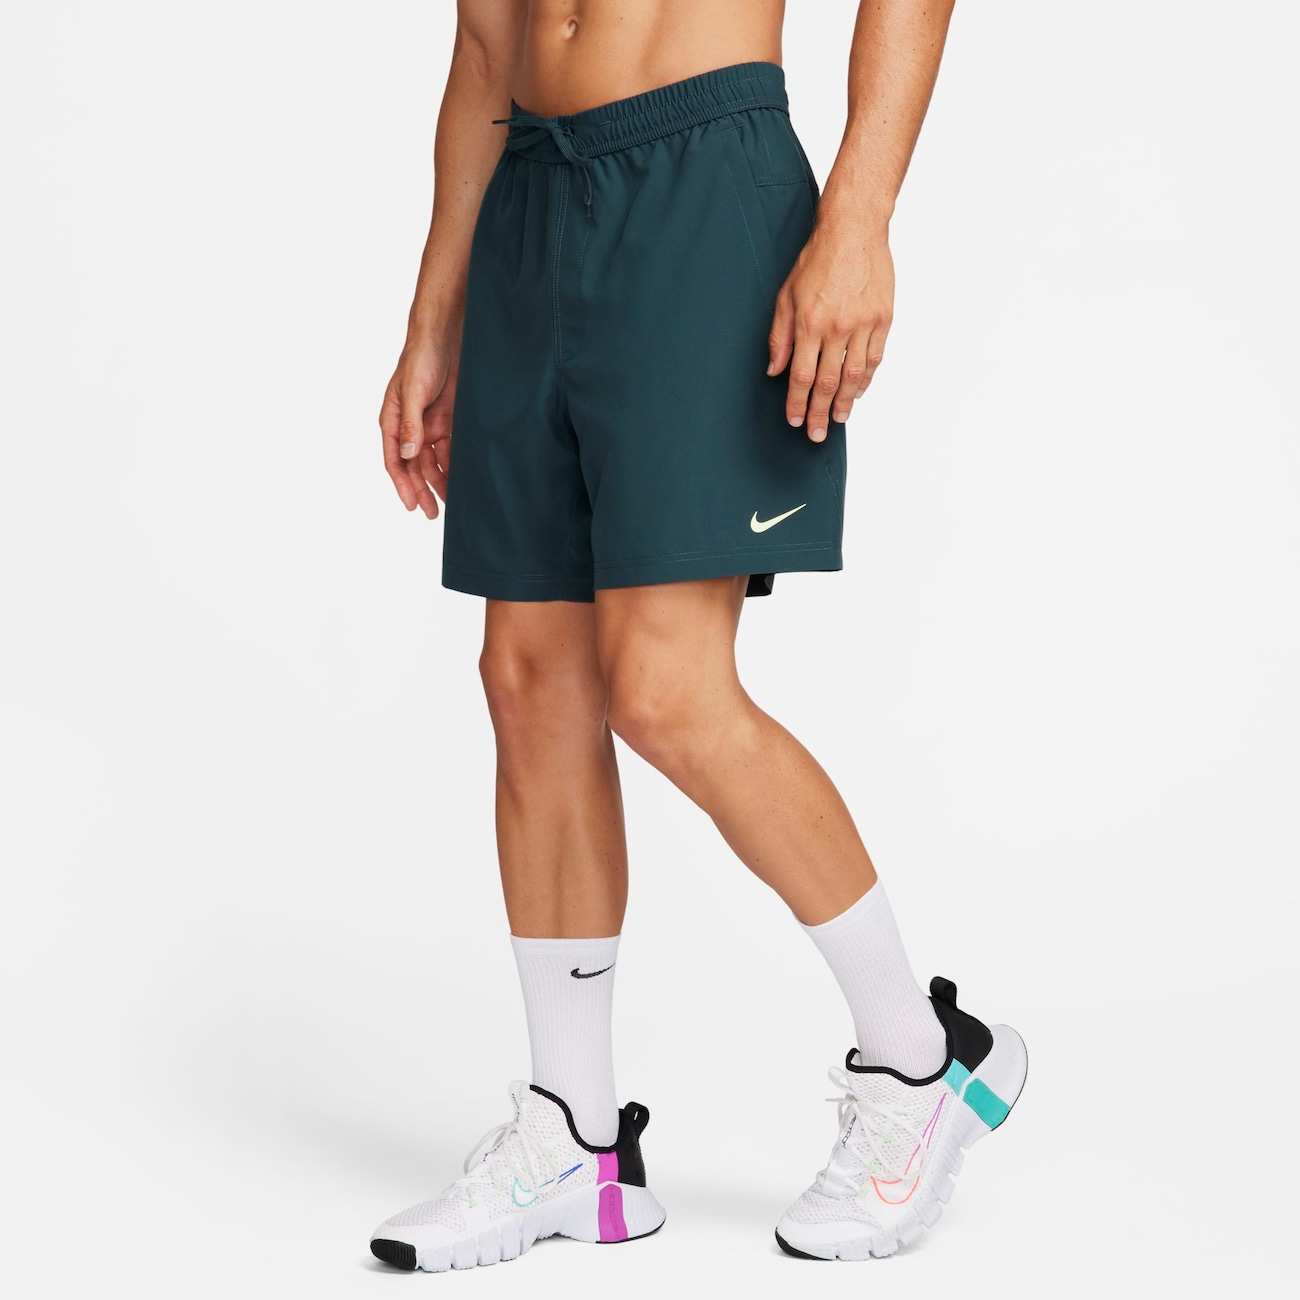 Nike Form Dri-FIT multifunctionele herenshorts zonder binnenbroek (18 cm) - Groen